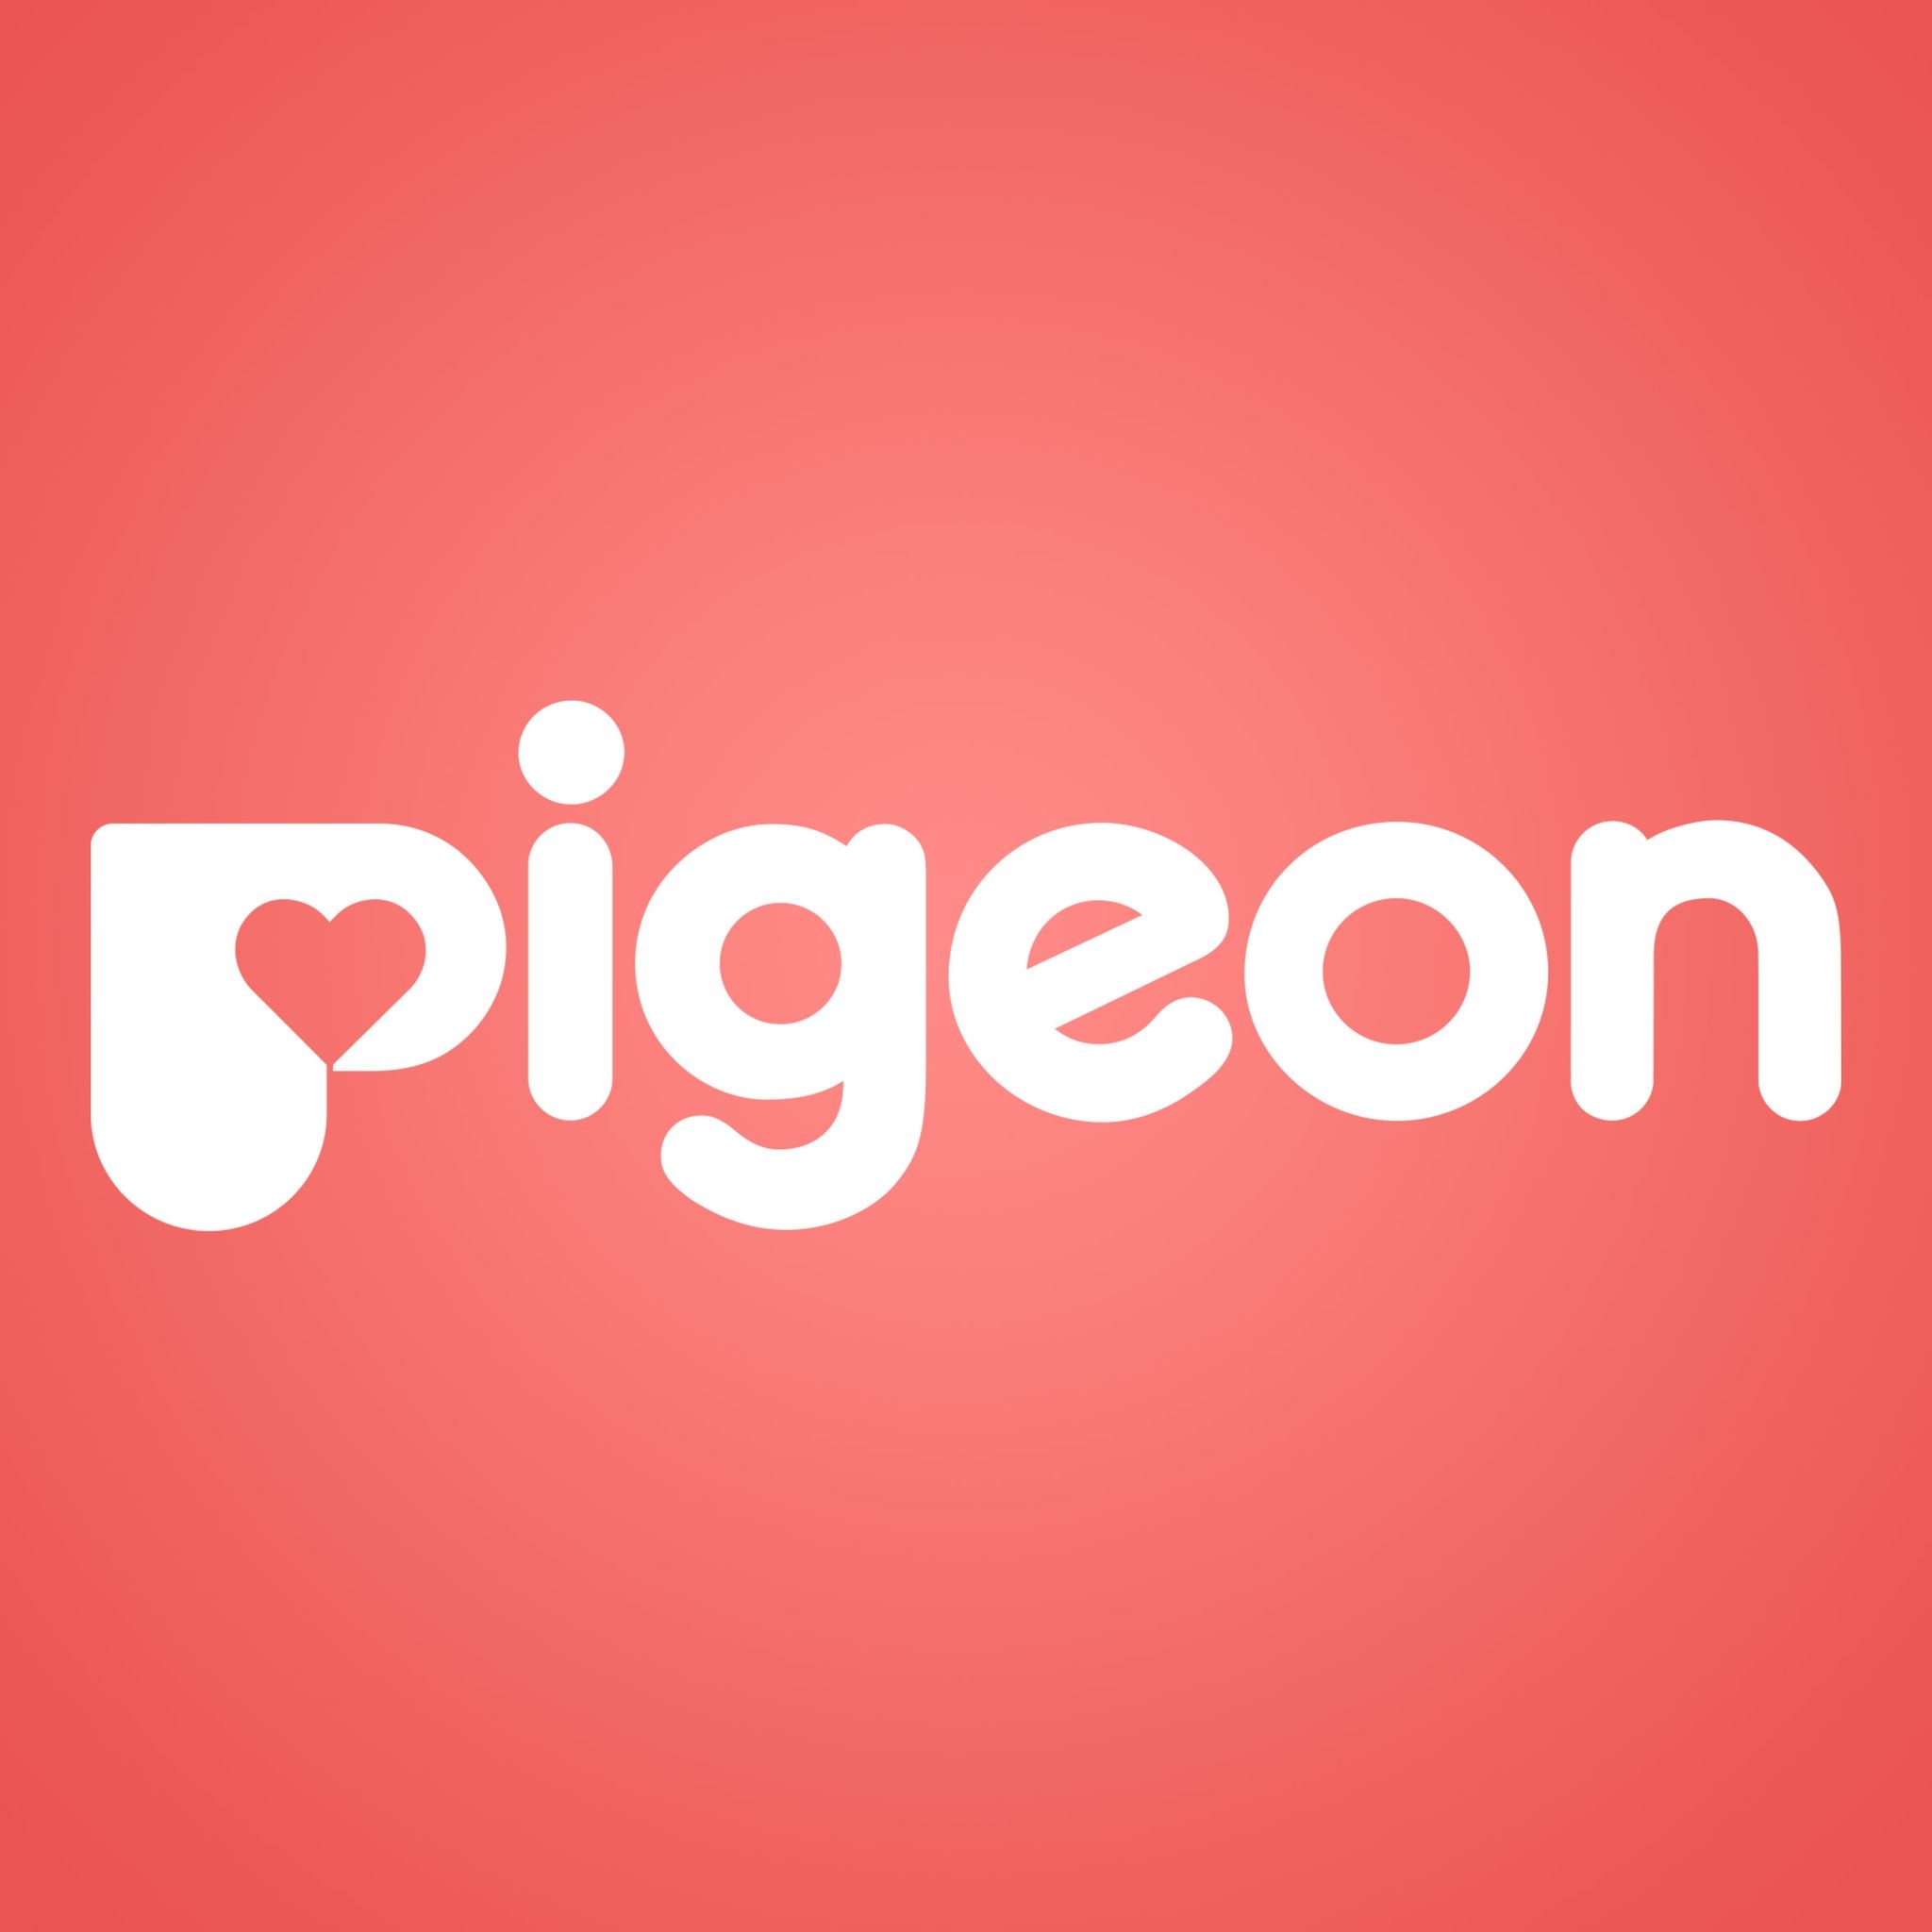 Pigeon Mongolia 